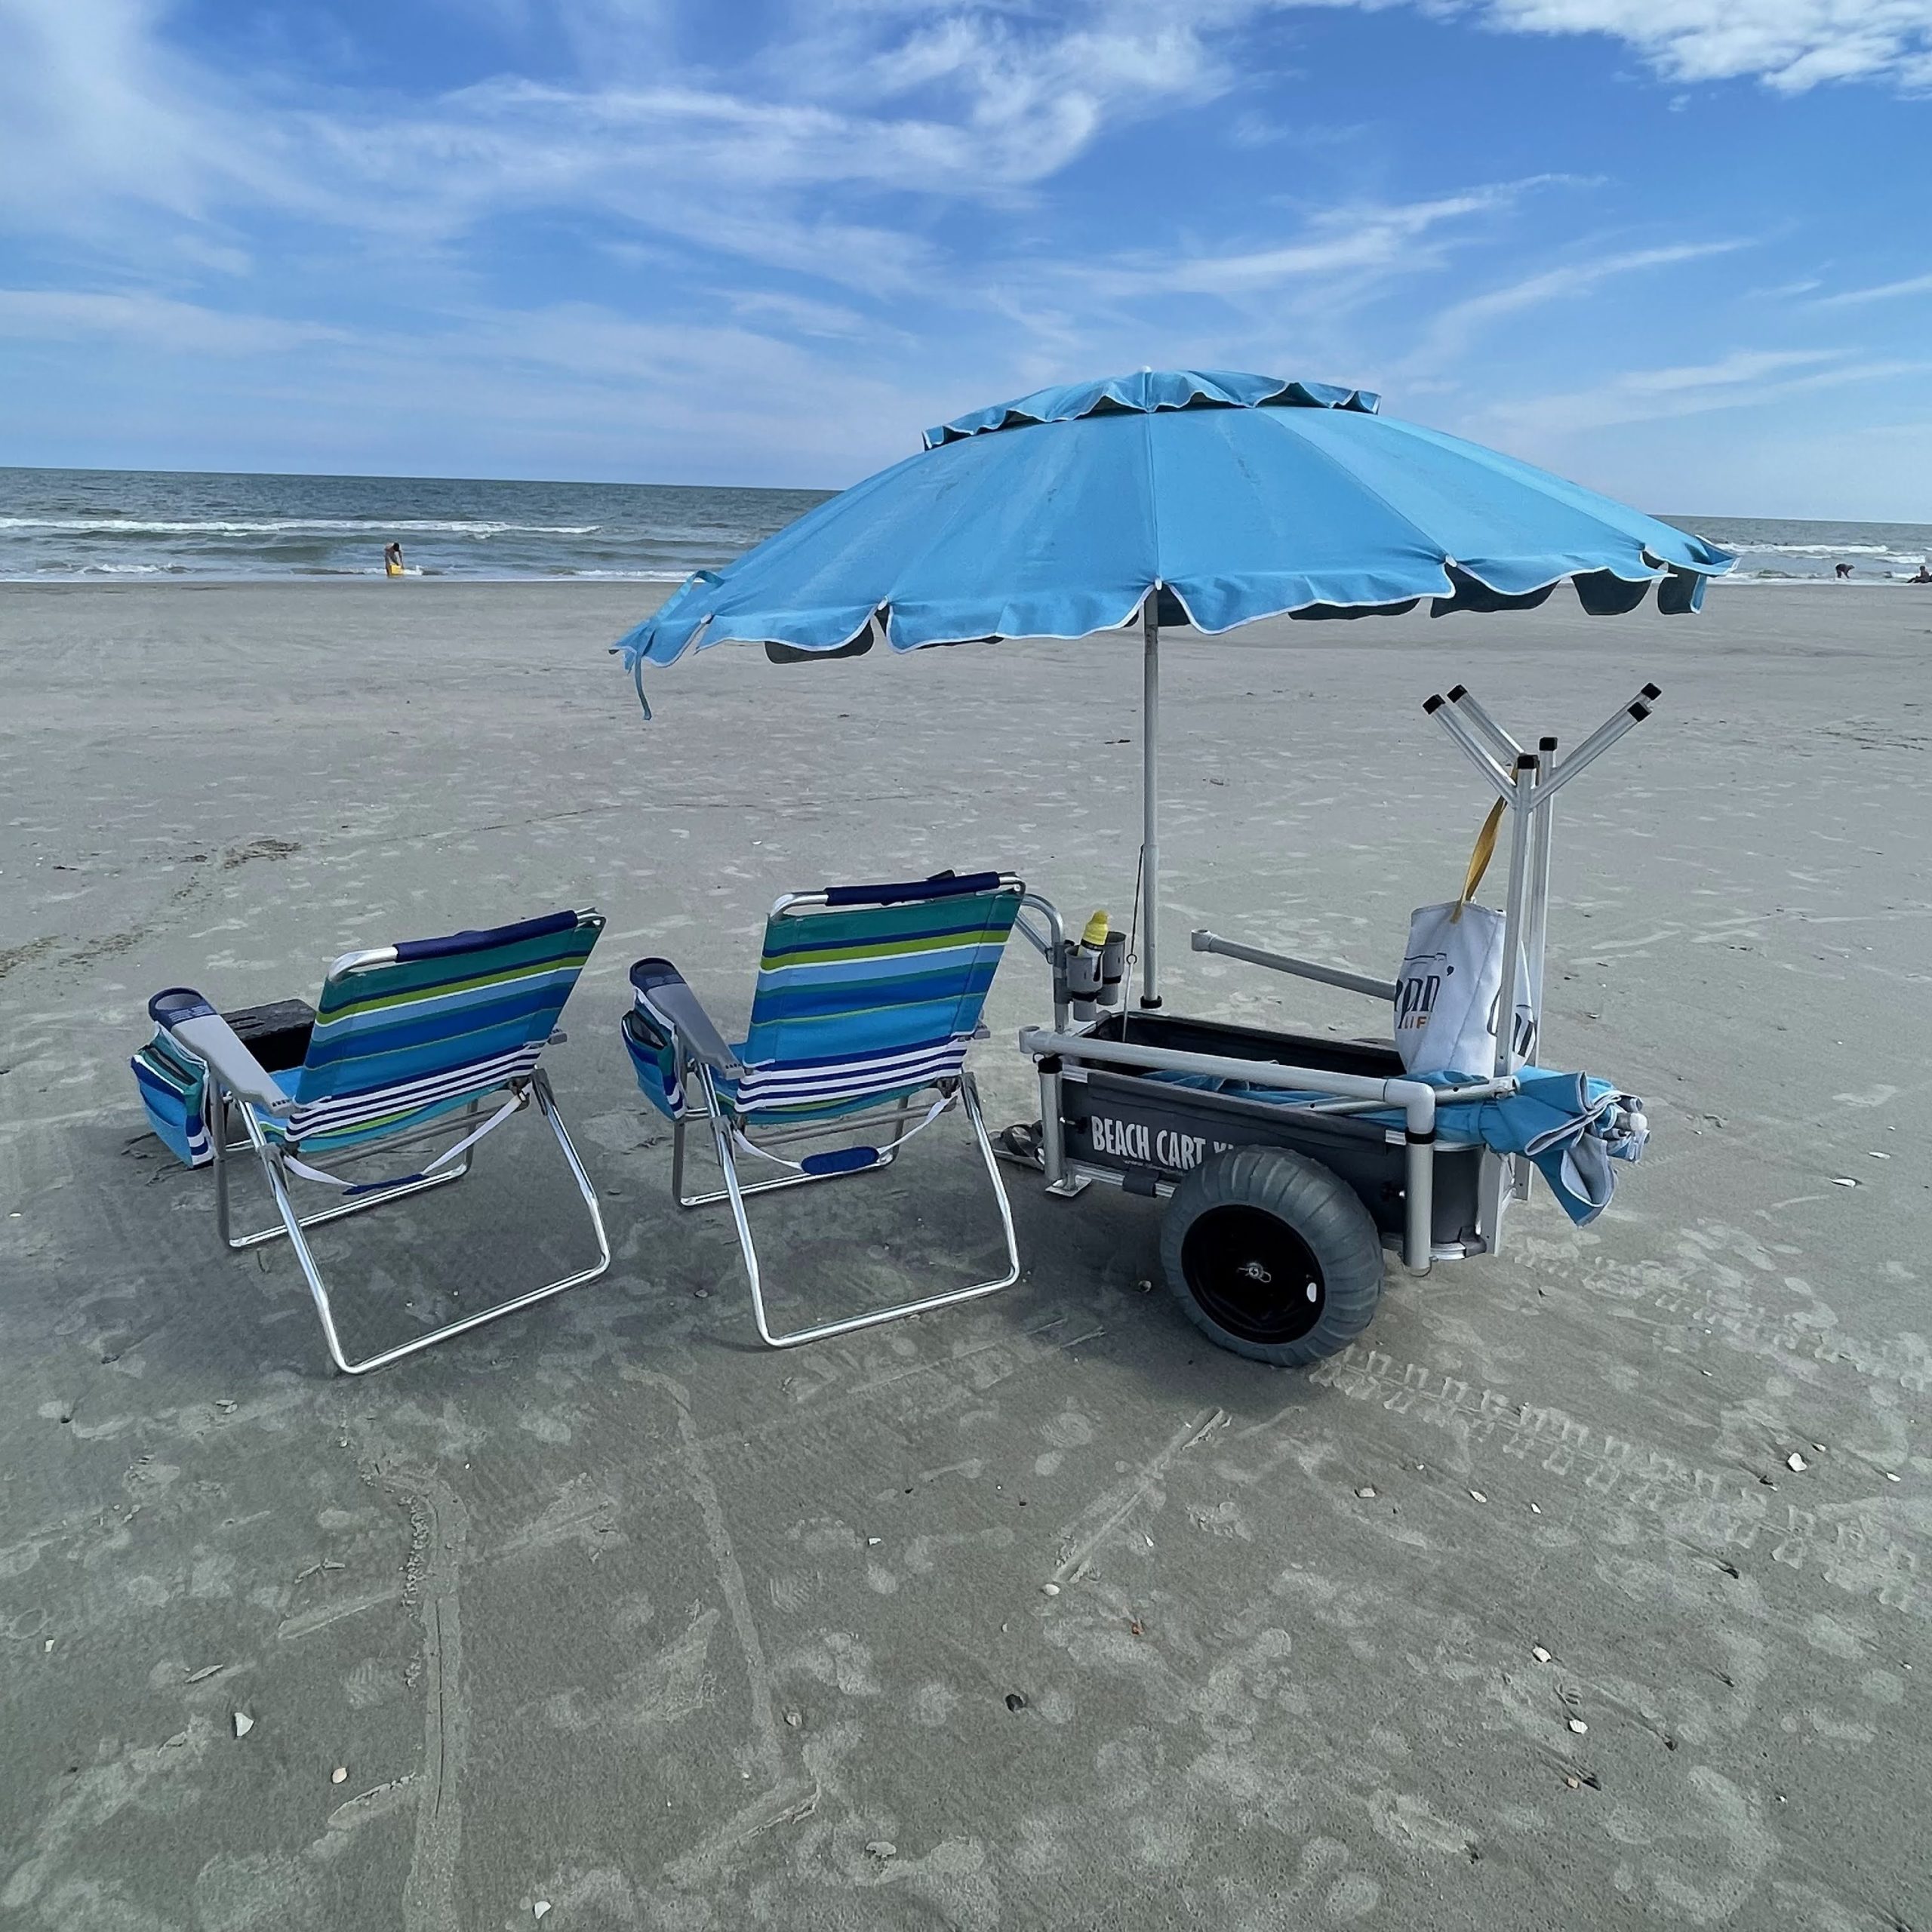 Glampin' Life Best Beach Carts / Beach Umbrella / Beach Gear